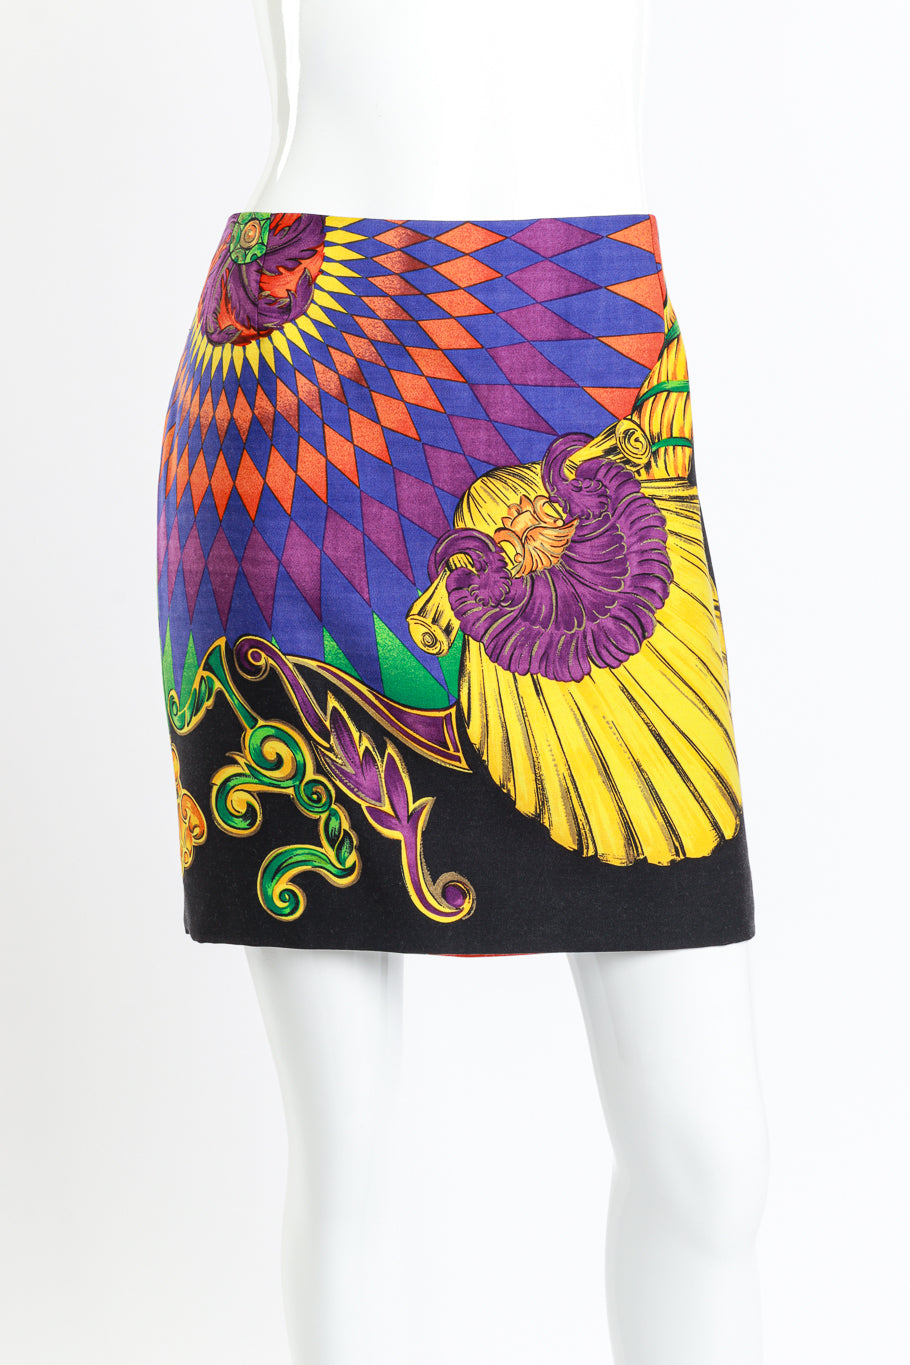 Versace 1991 Cornucopia of Prints Skirt Suit skirt on mannequin @RECESS LA